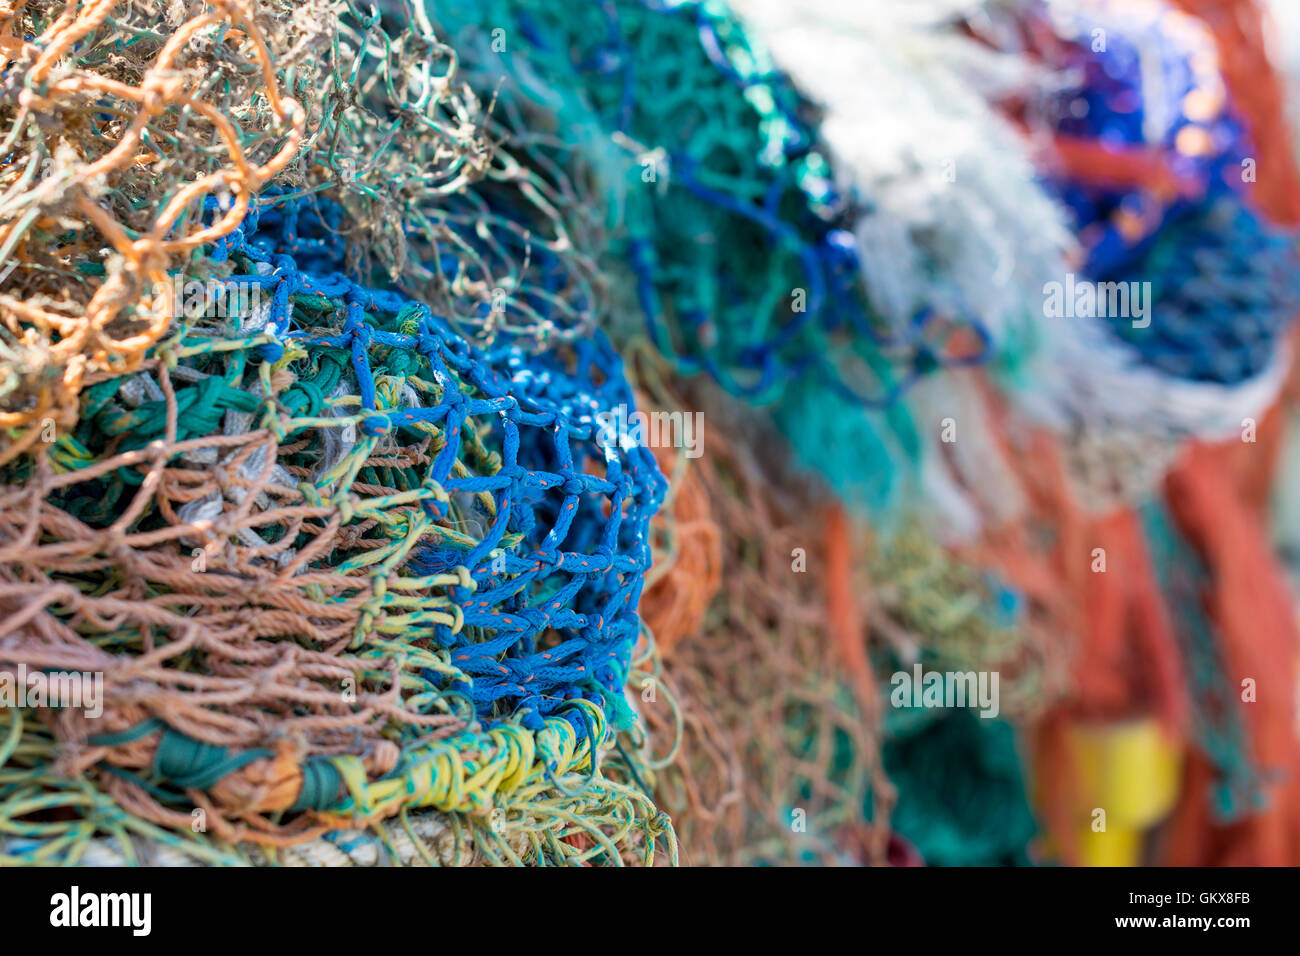 Closeup of a pile of vibrant fishing nets Stock Photo